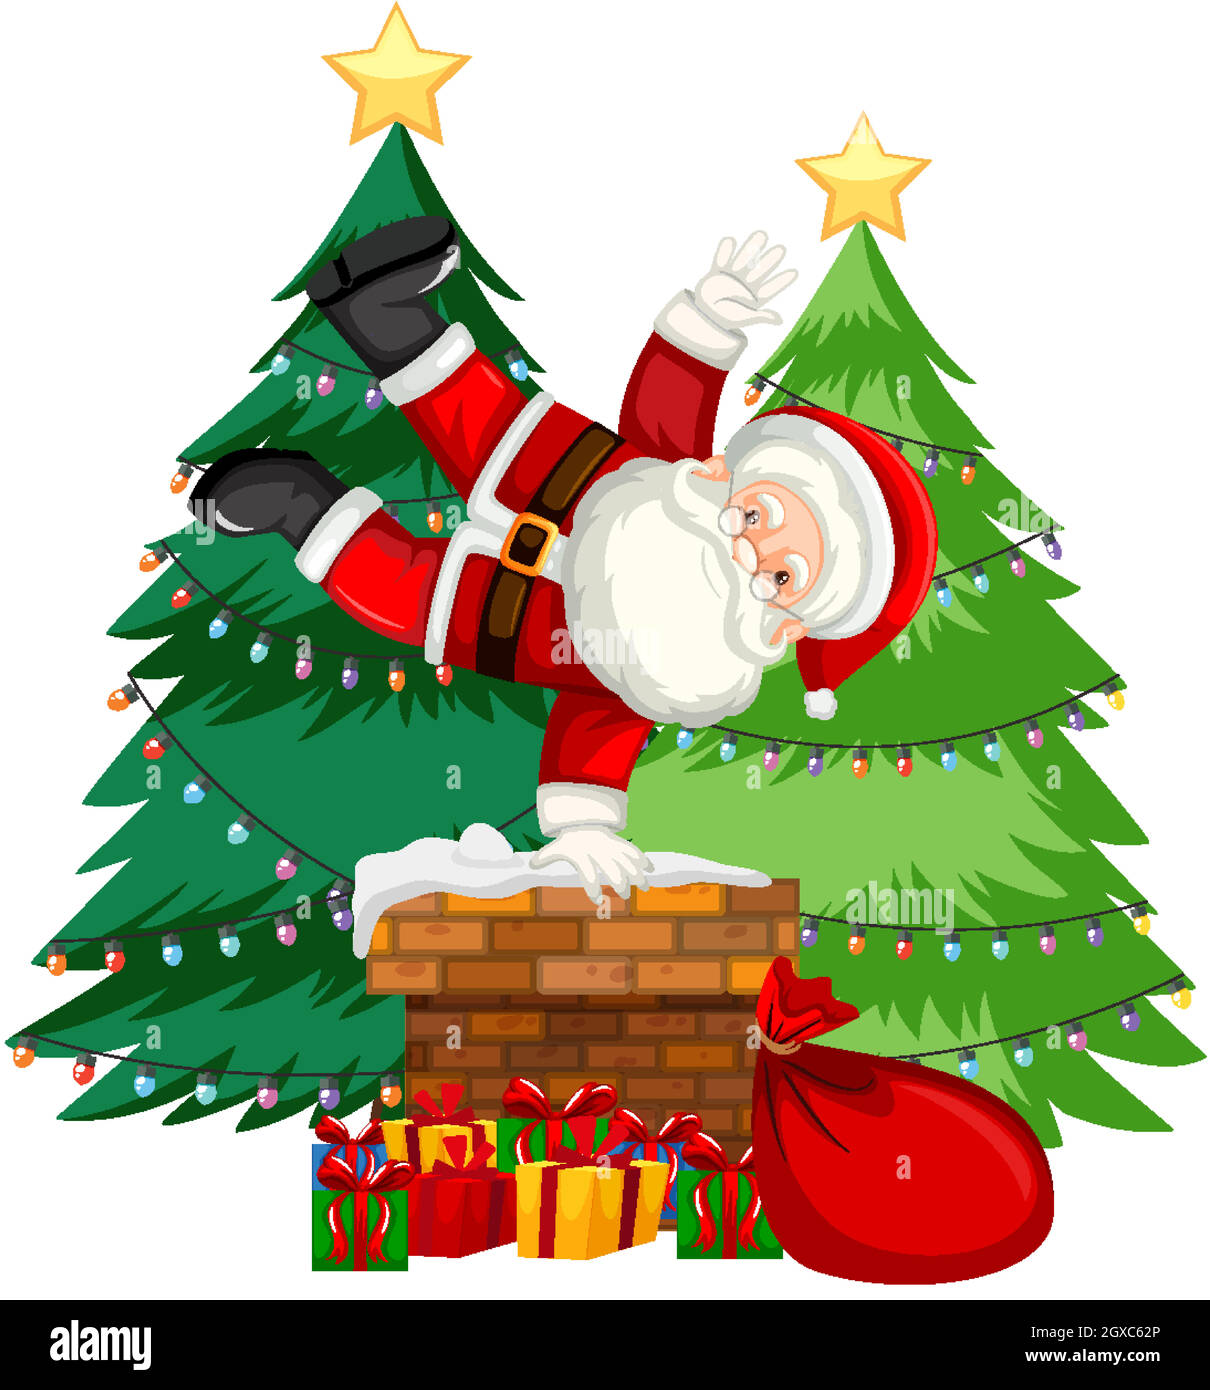 Christmas theme with Santa and presents Stock Vector